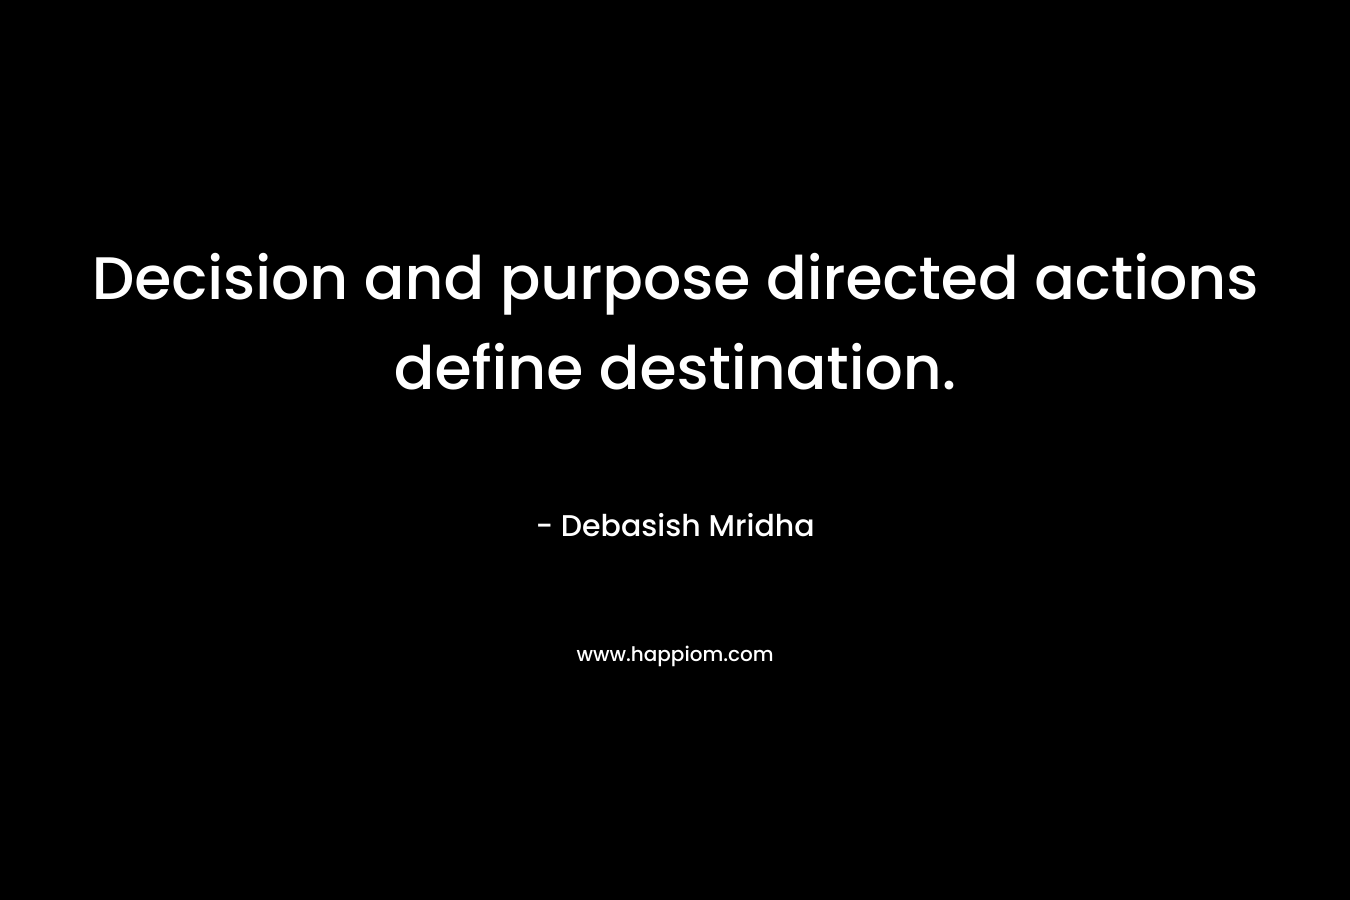 Decision and purpose directed actions define destination.